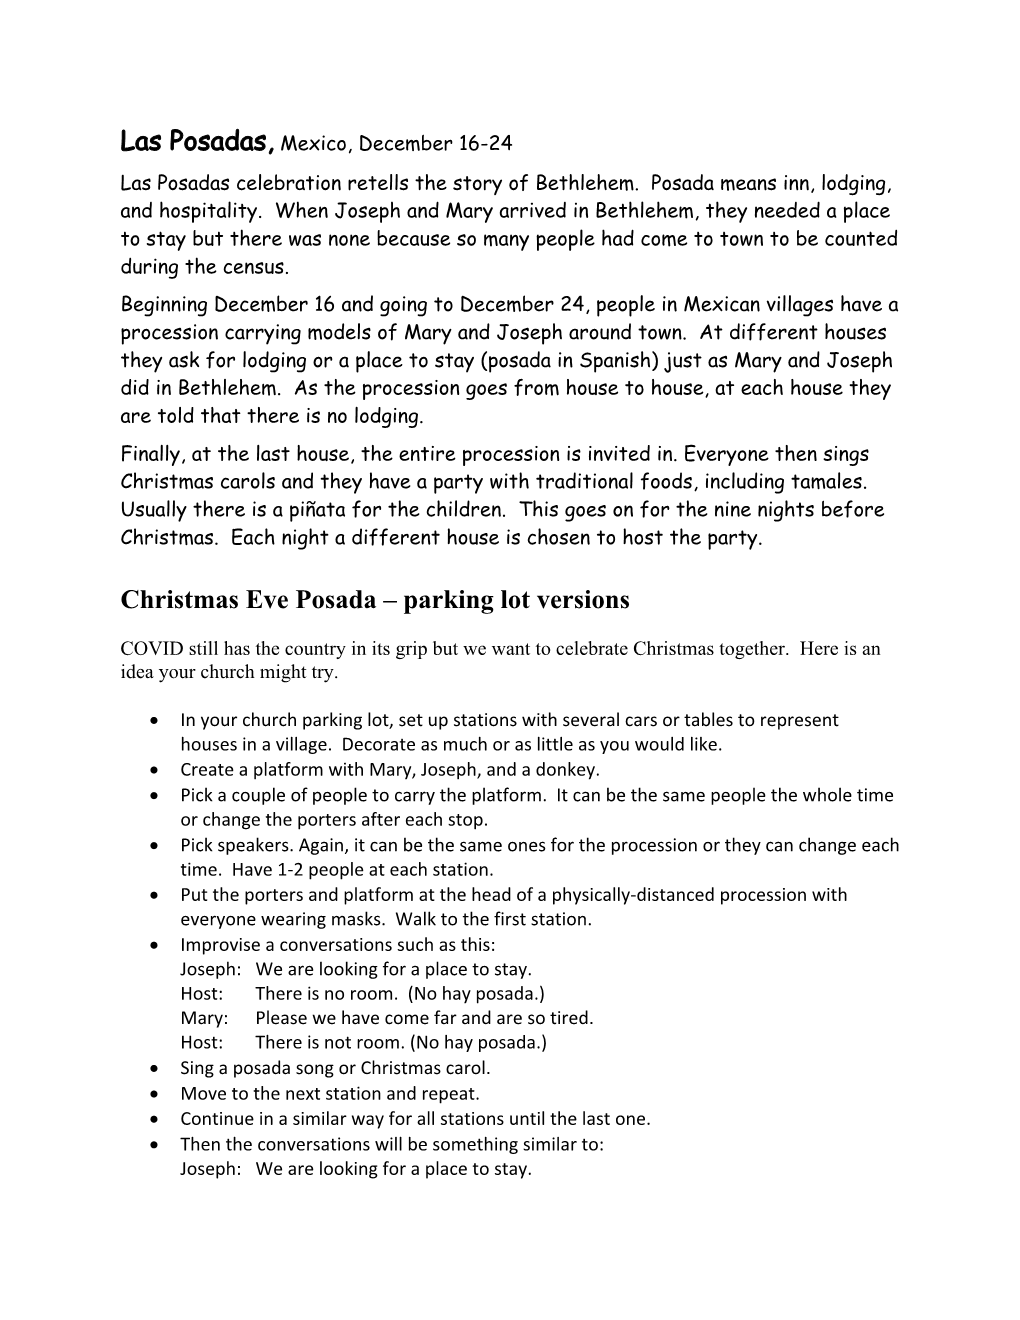 Christmas Eve Posada – Parking Lot Versions